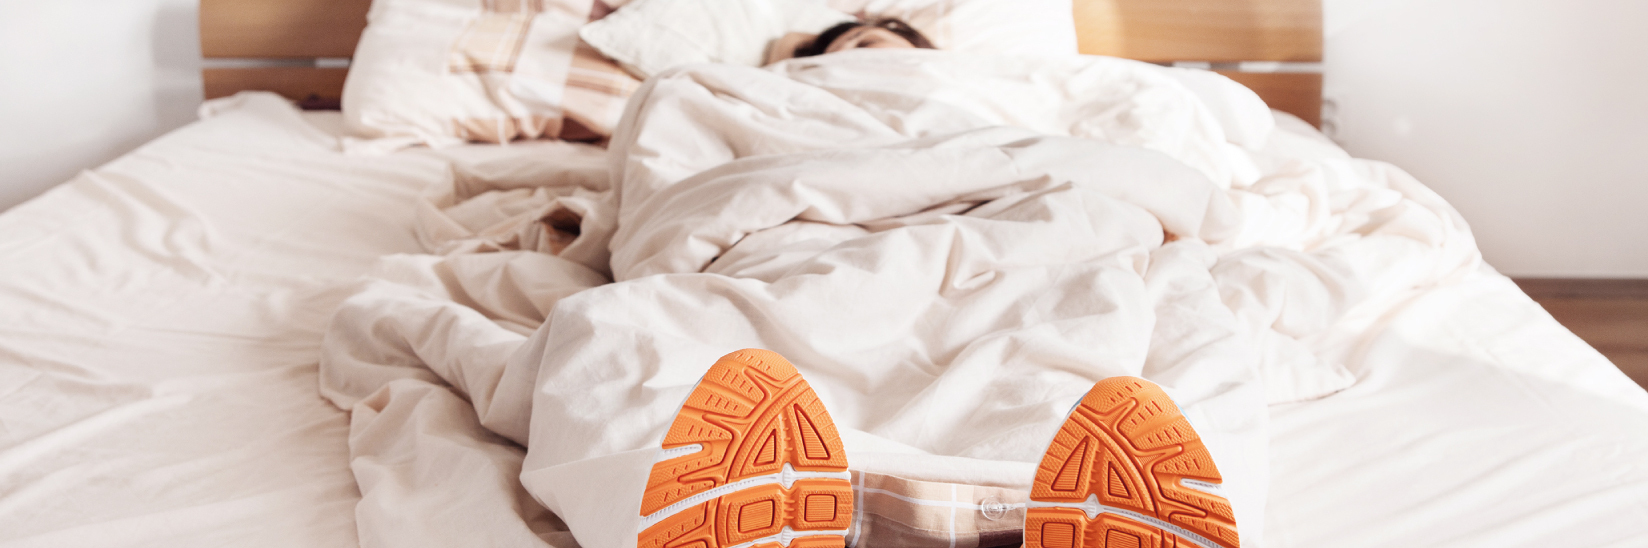 How does exercise improve sleep?